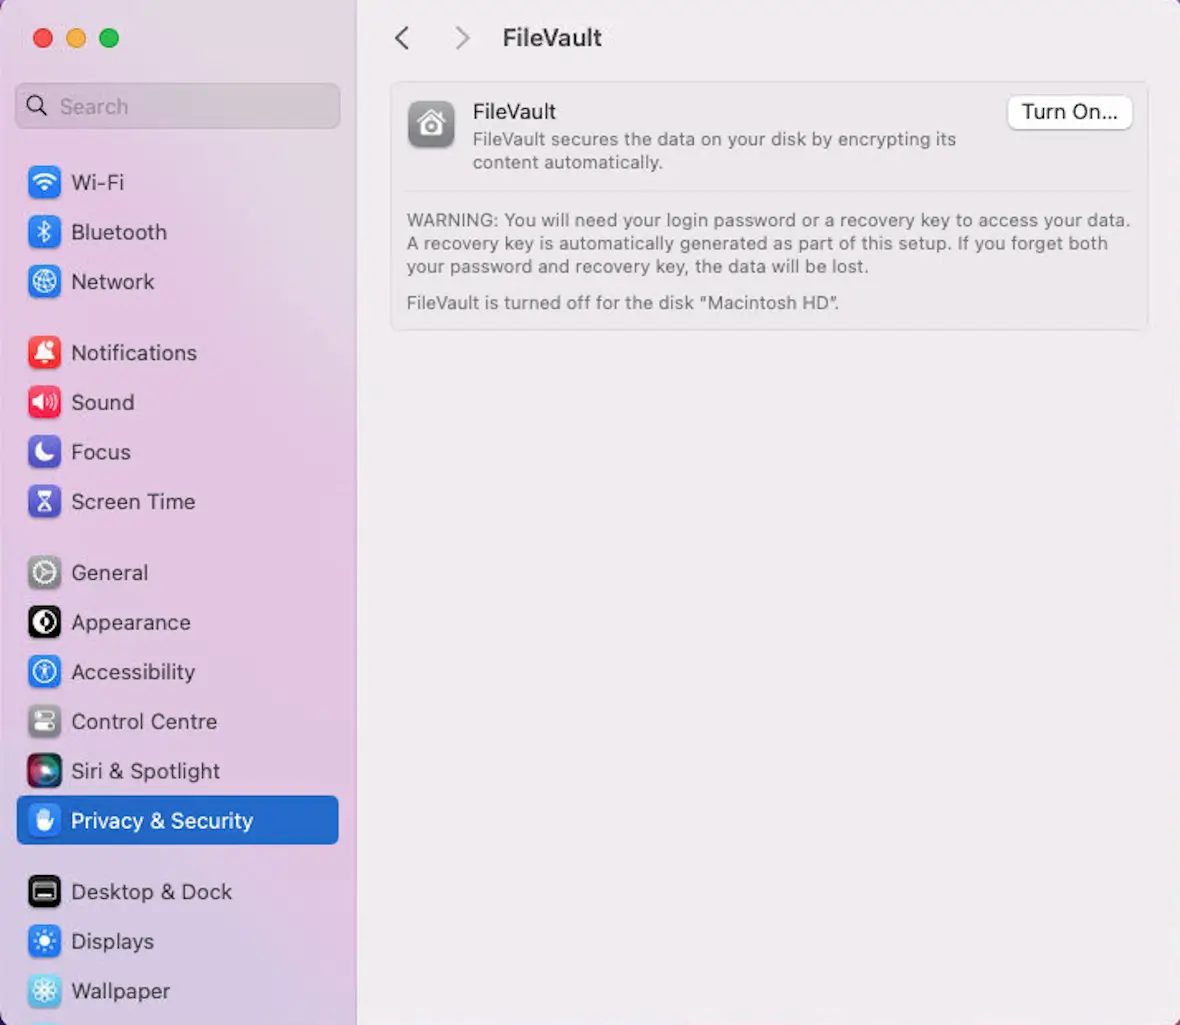 A screenshot showing FileVault settings in Mac OS X.